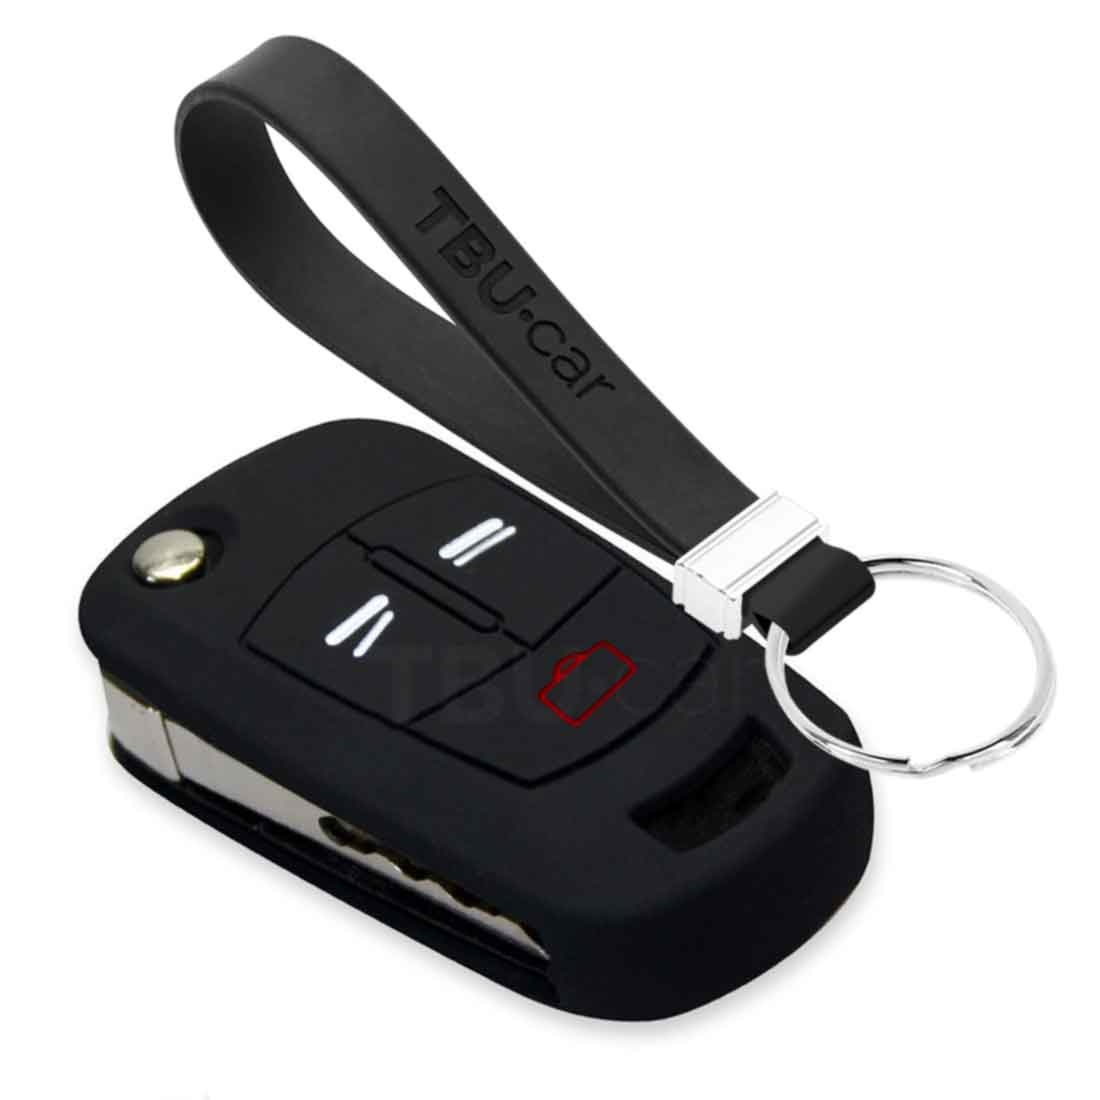 TBU car TBU car Autoschlüssel Hülle kompatibel mit Opel 3 Tasten - Schutzhülle aus Silikon - Auto Schlüsselhülle Cover in Schwarz